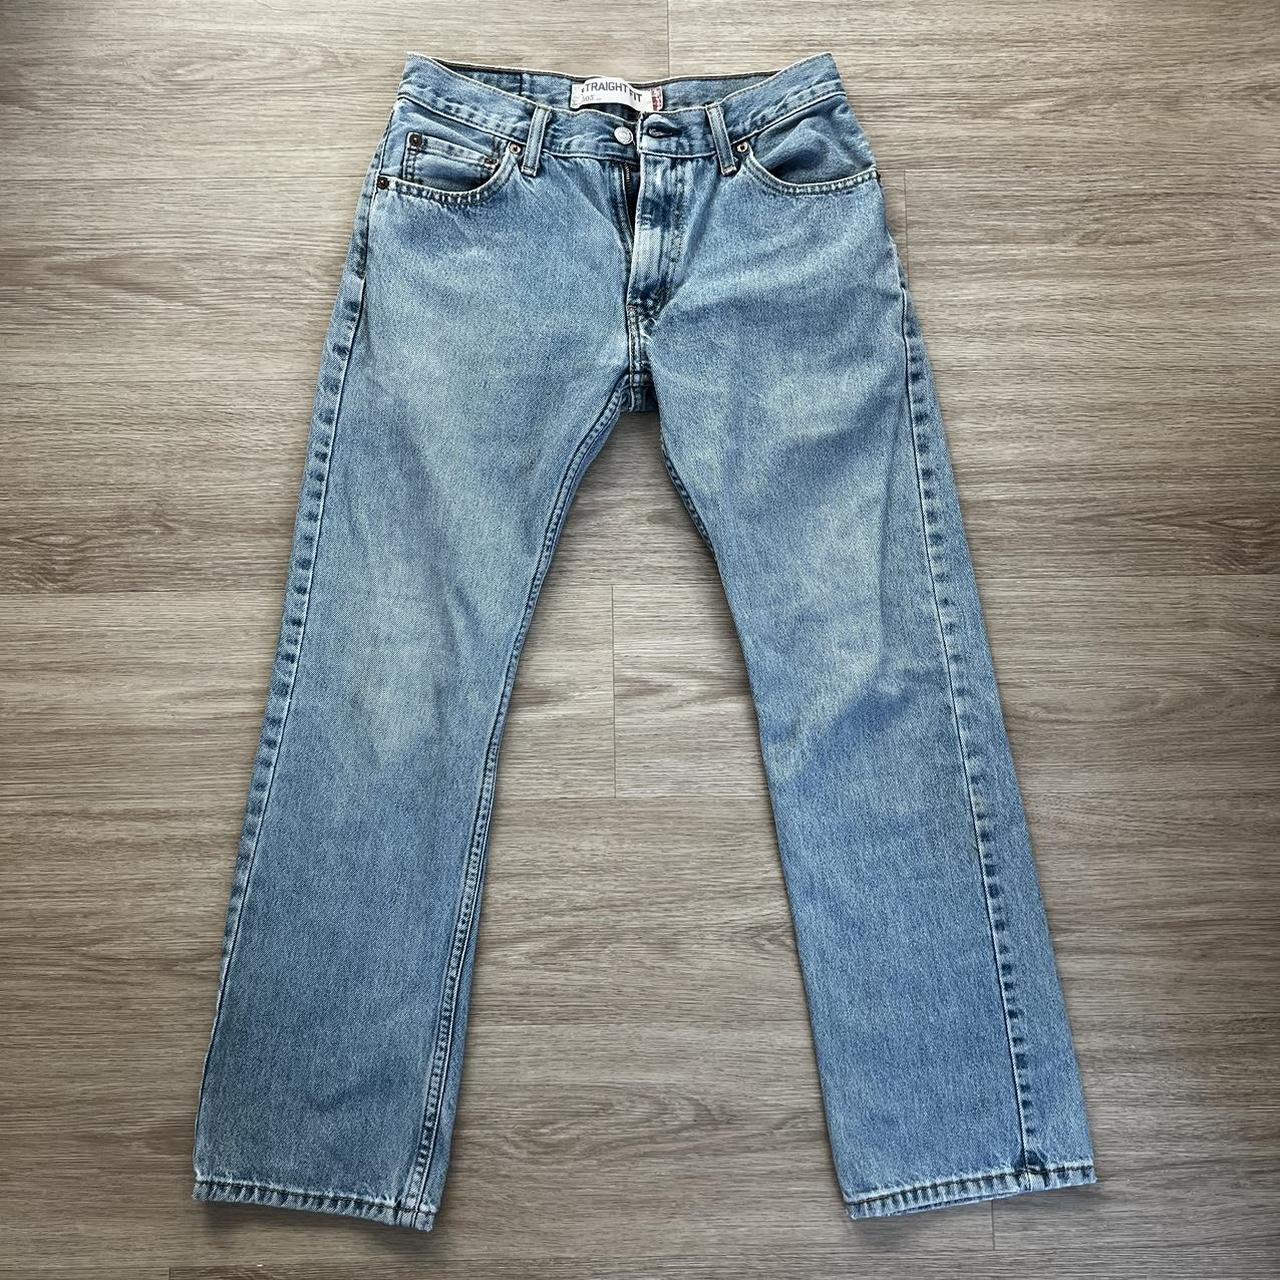 Levi’s 505 Denim Jeans size 30x30 Light... - Depop